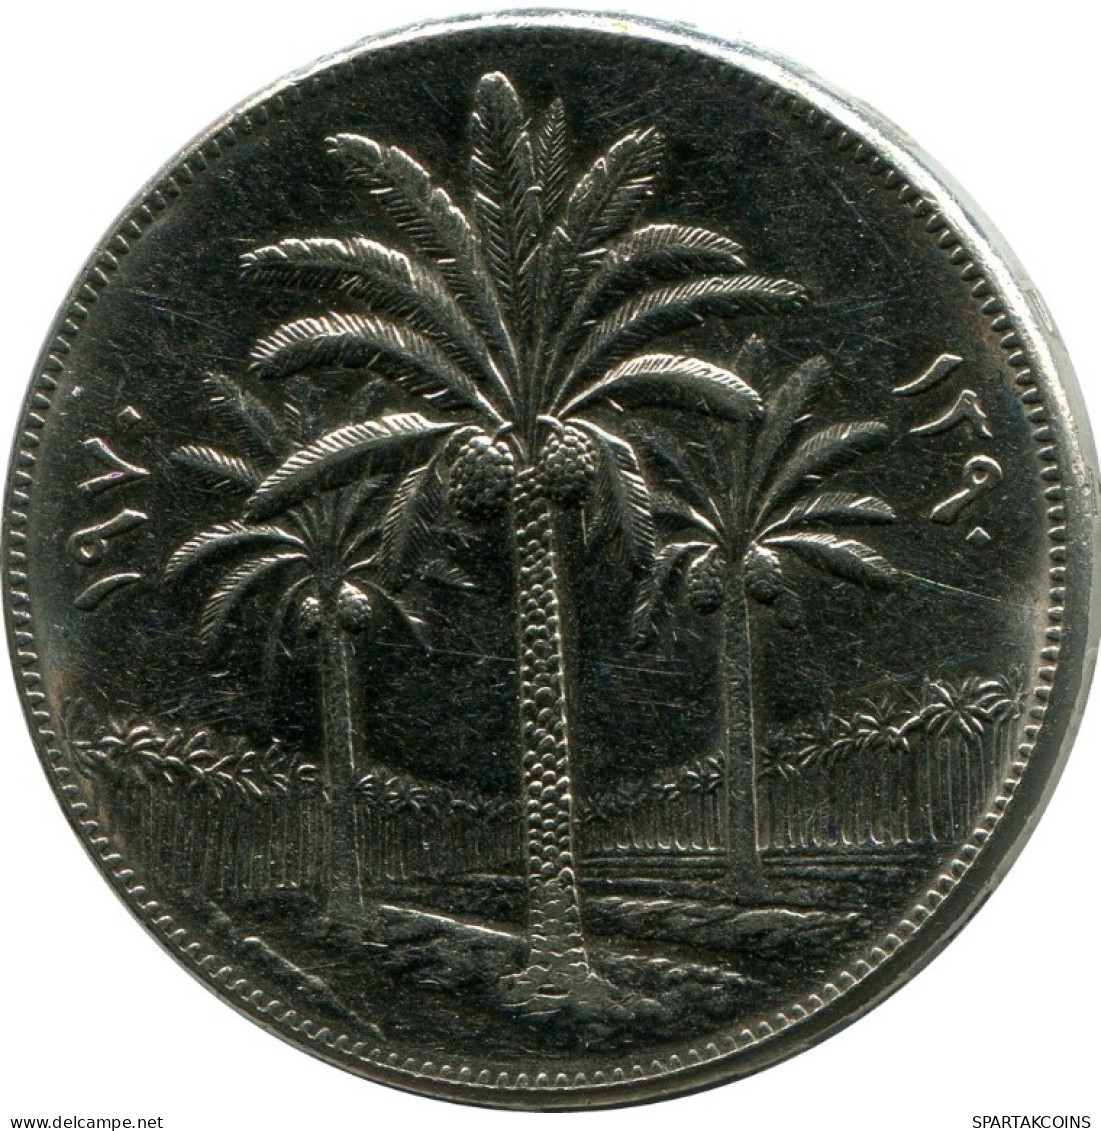 250 FILS 1970 IBAK IRAQ Islamisch Münze #AK001.D.A - Irak